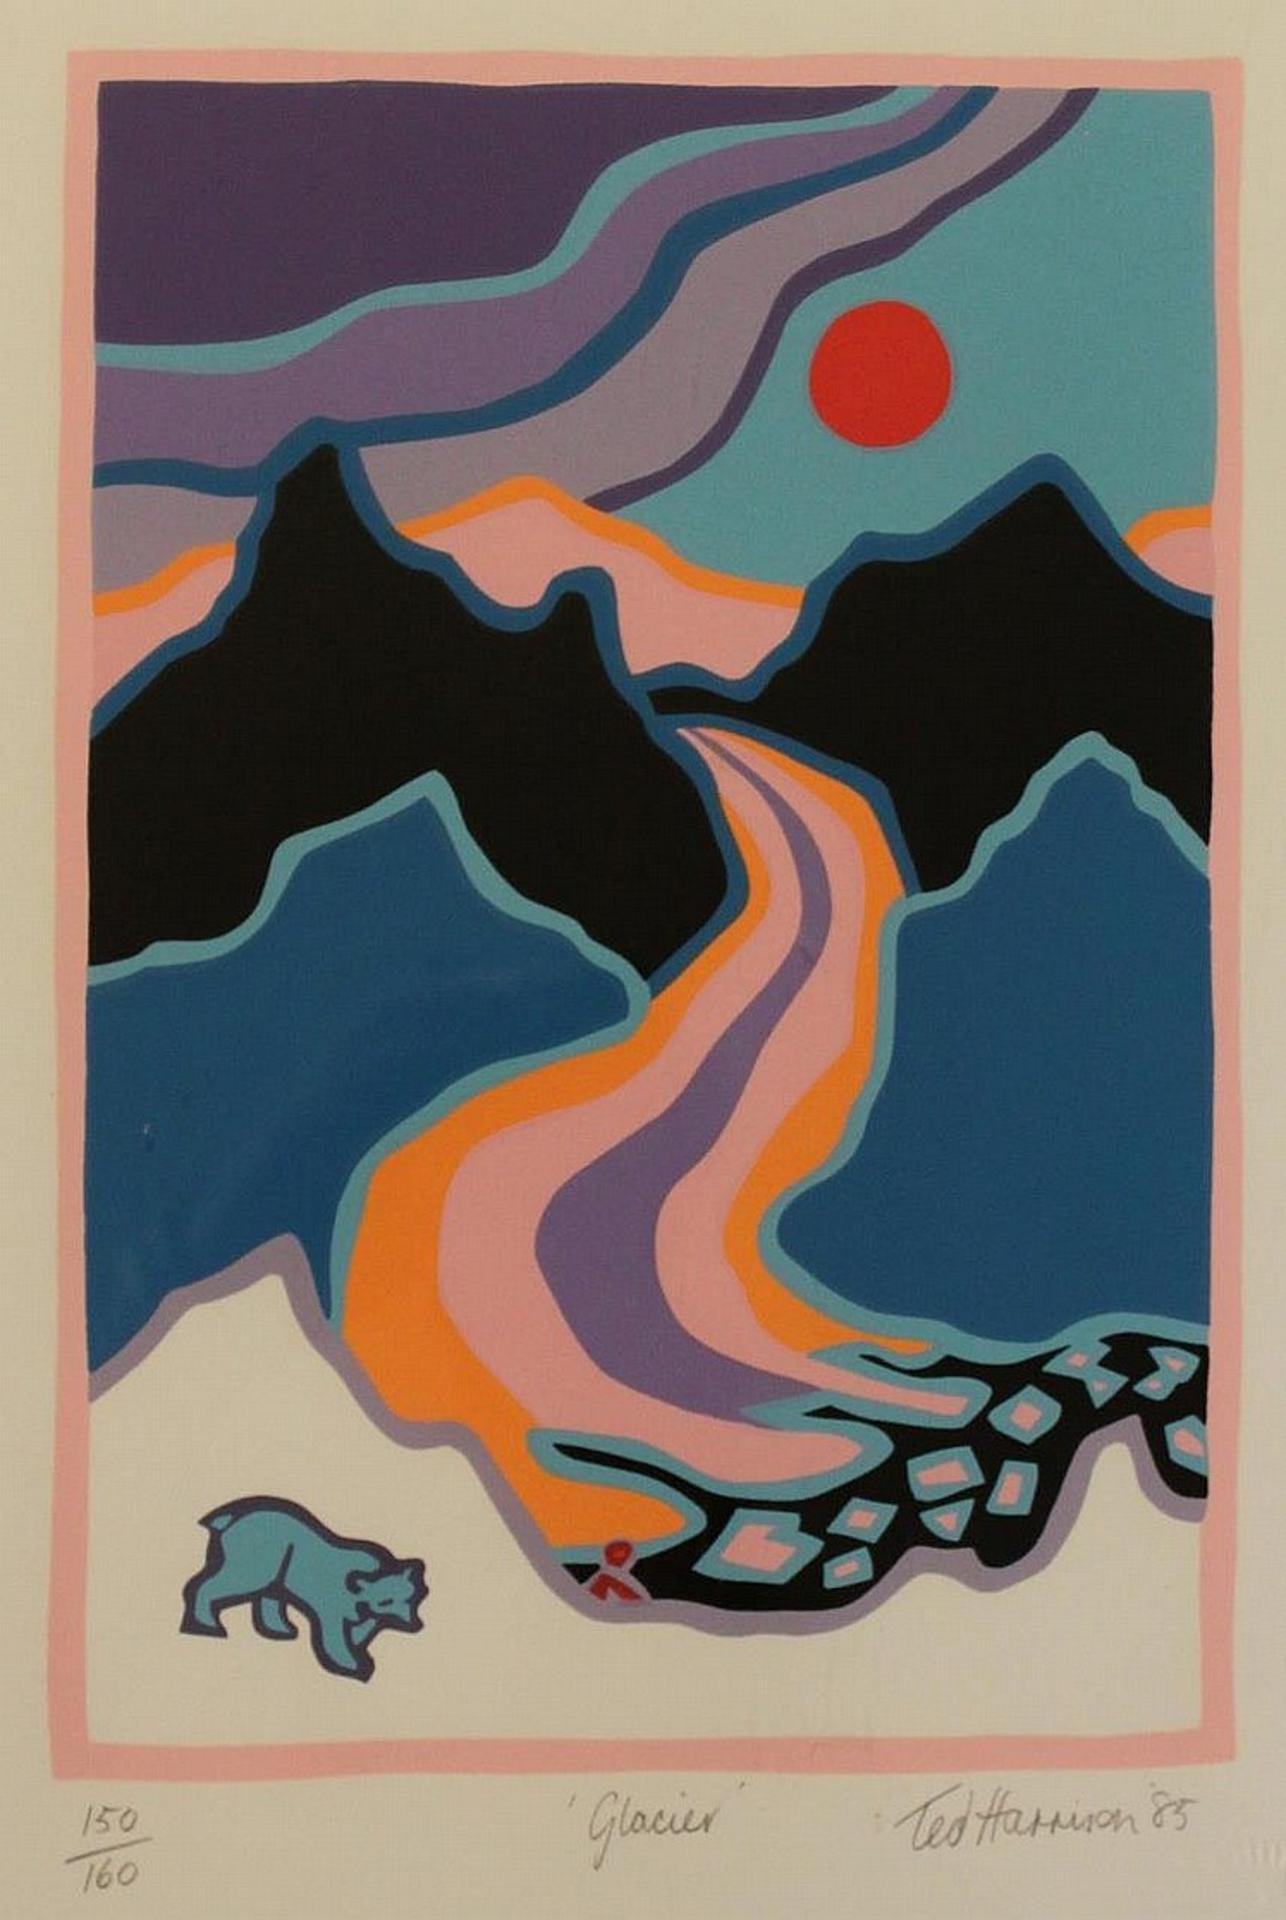 Ted Harrison (1926-2015) - colour silkscreen